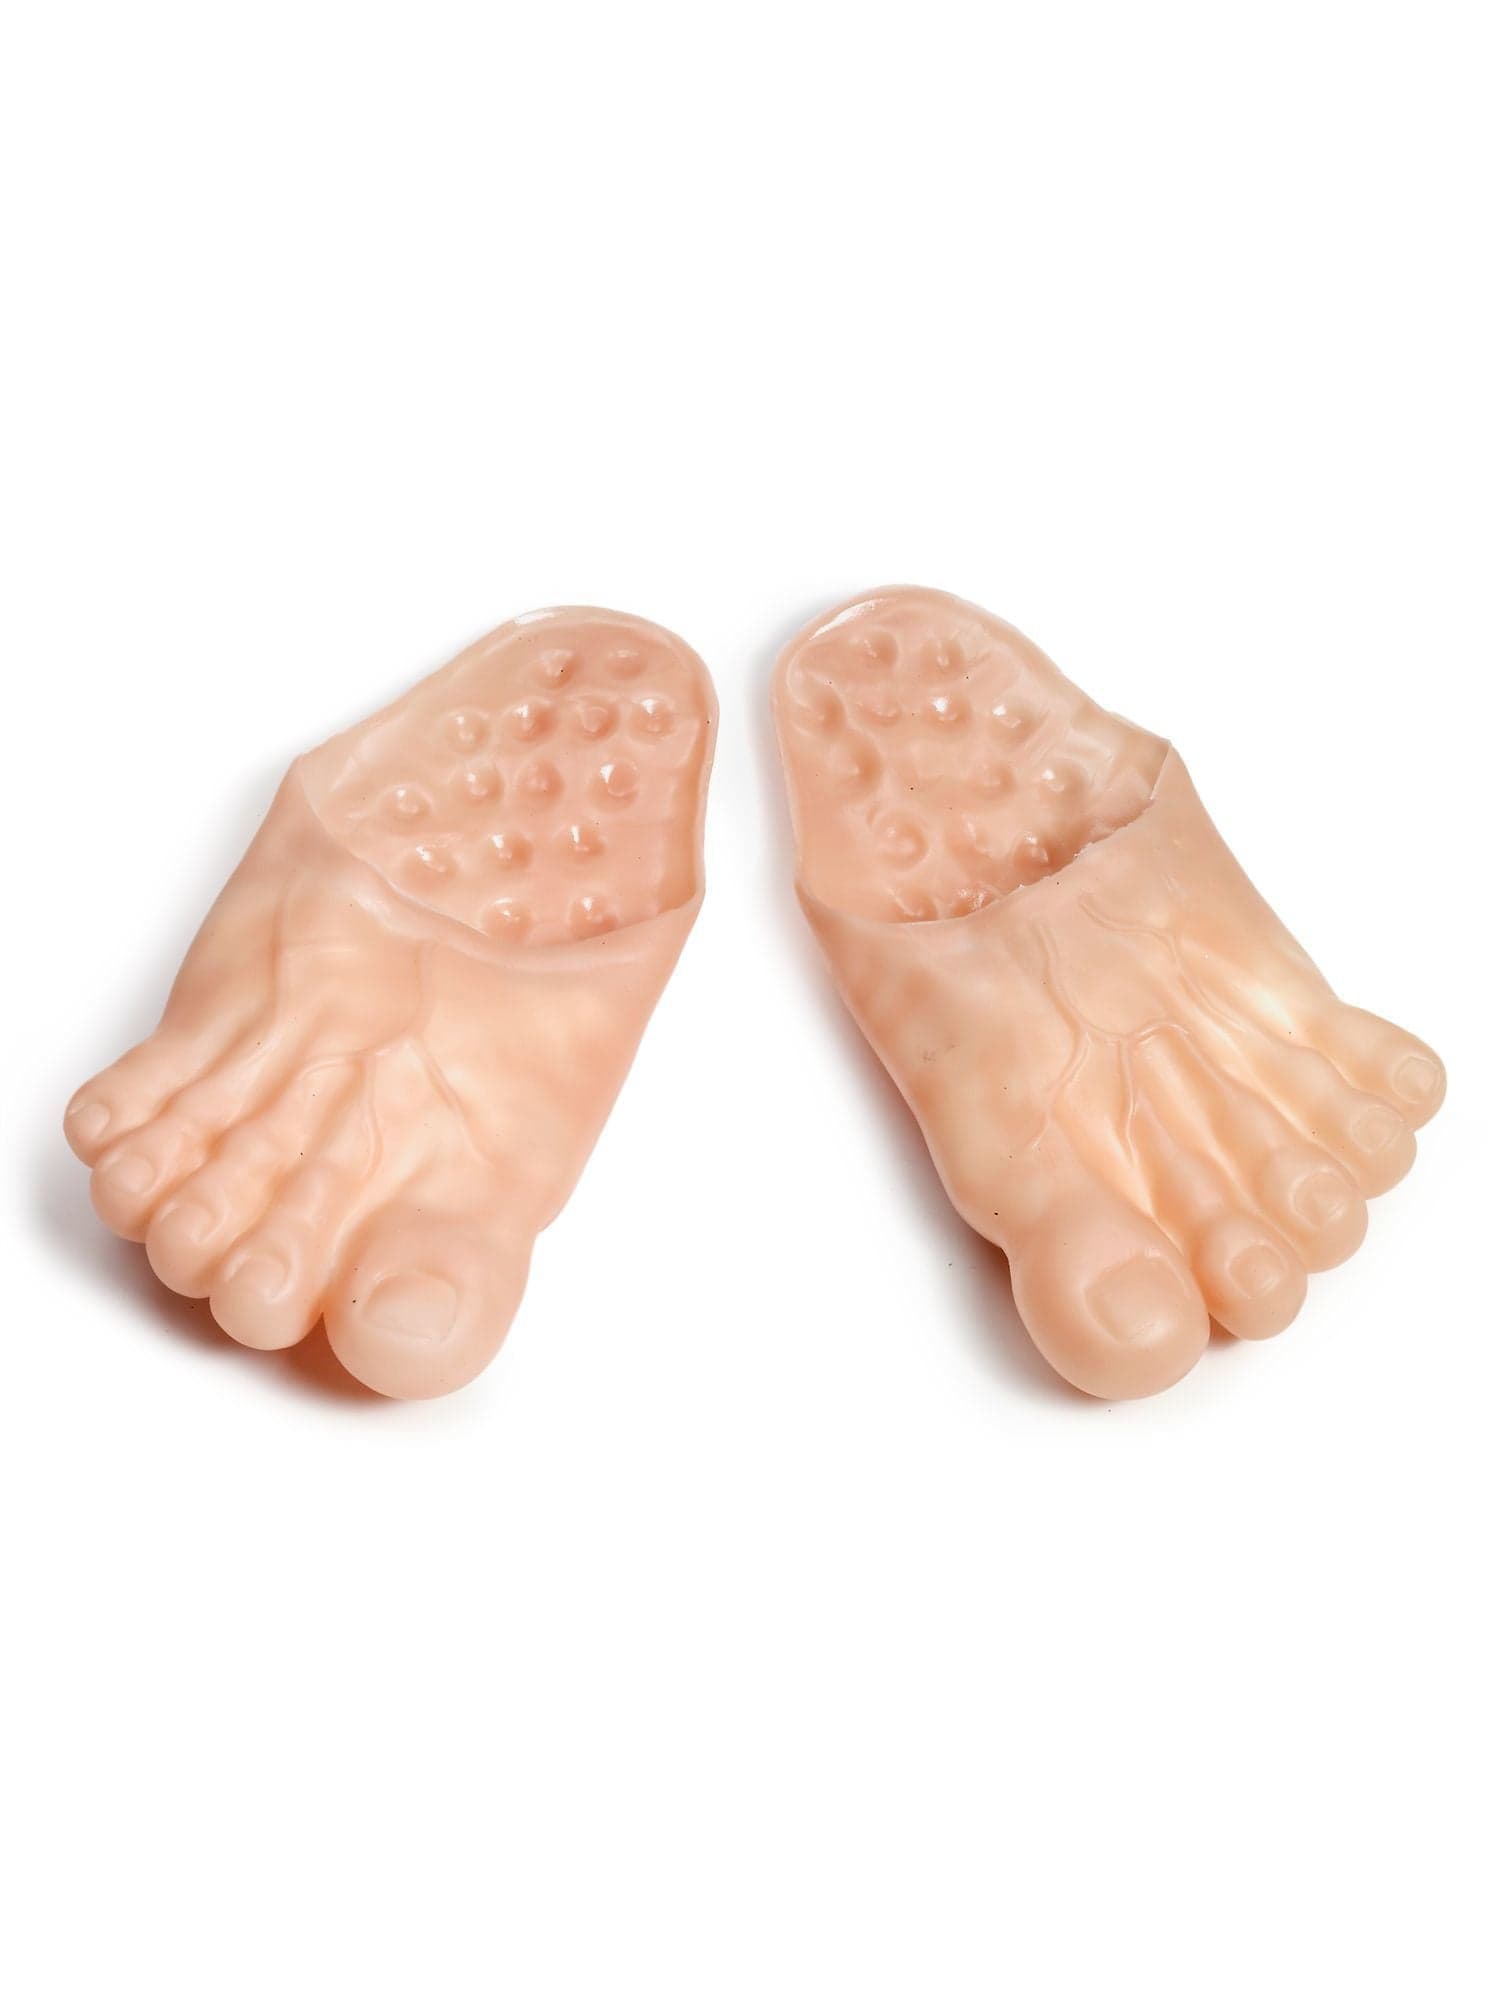 Adult Funny Feet Slippers - costumes.com